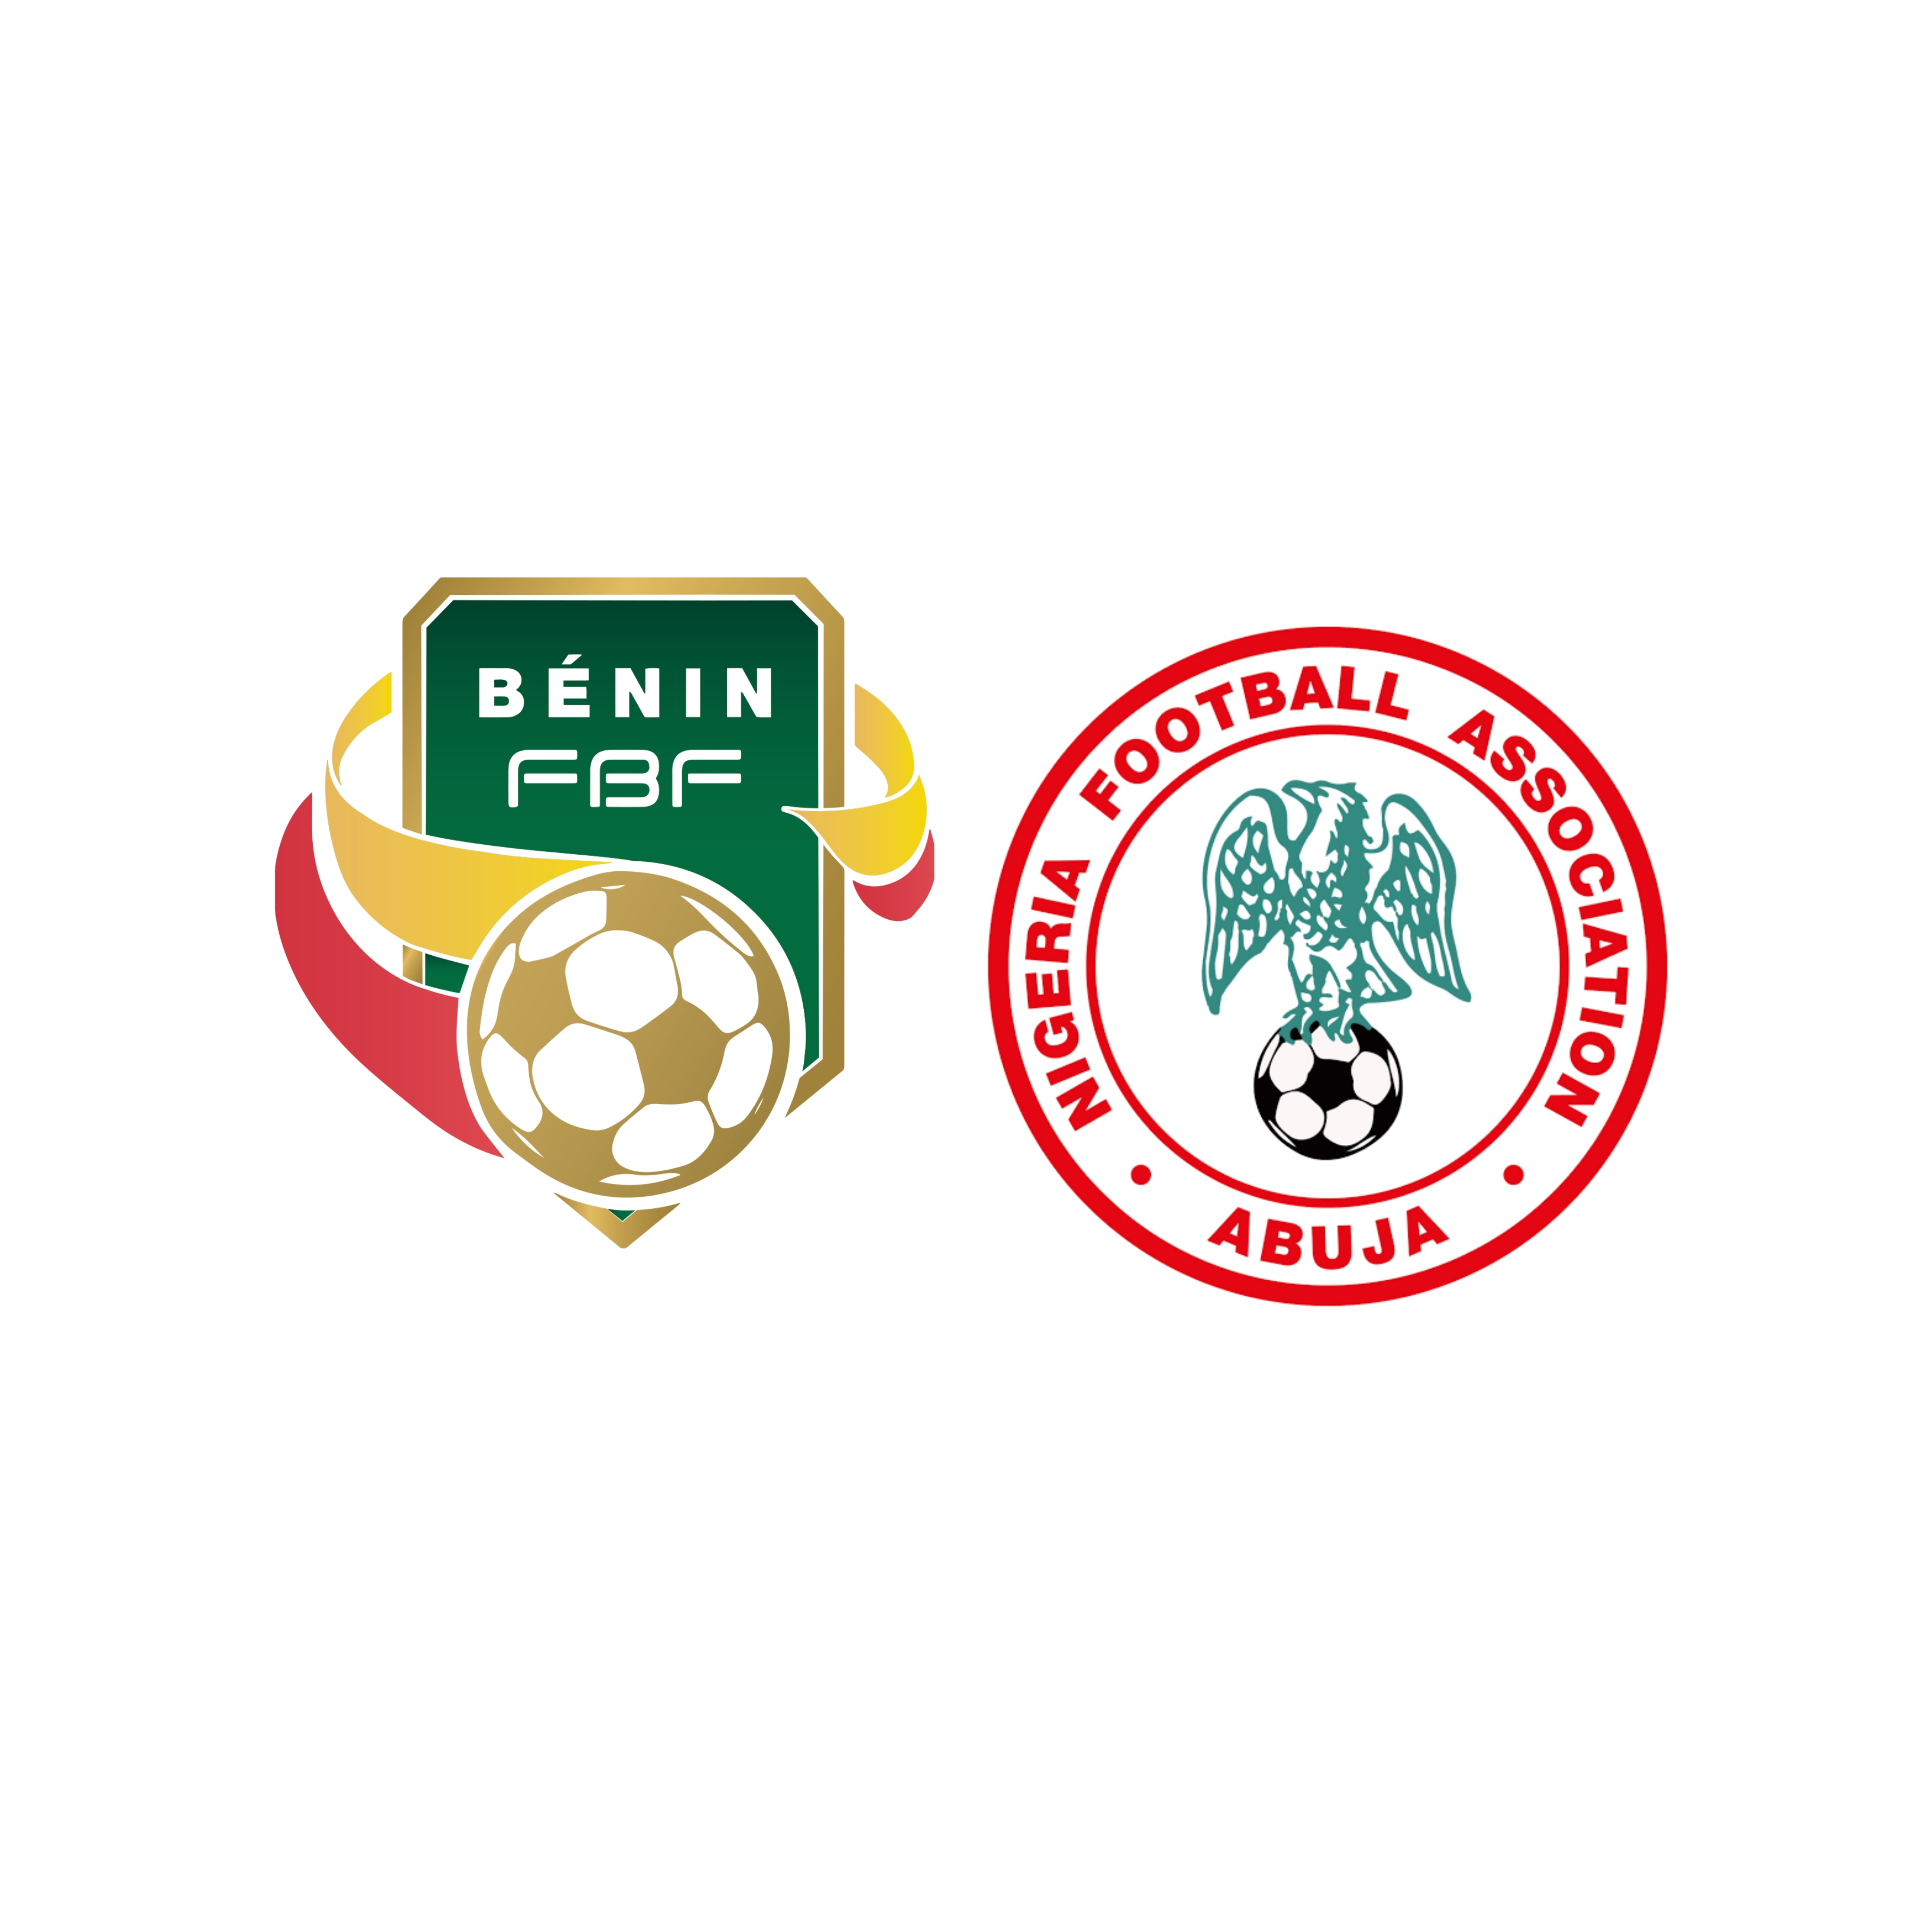 Benin Set to Take on Nigeria - Match Preview